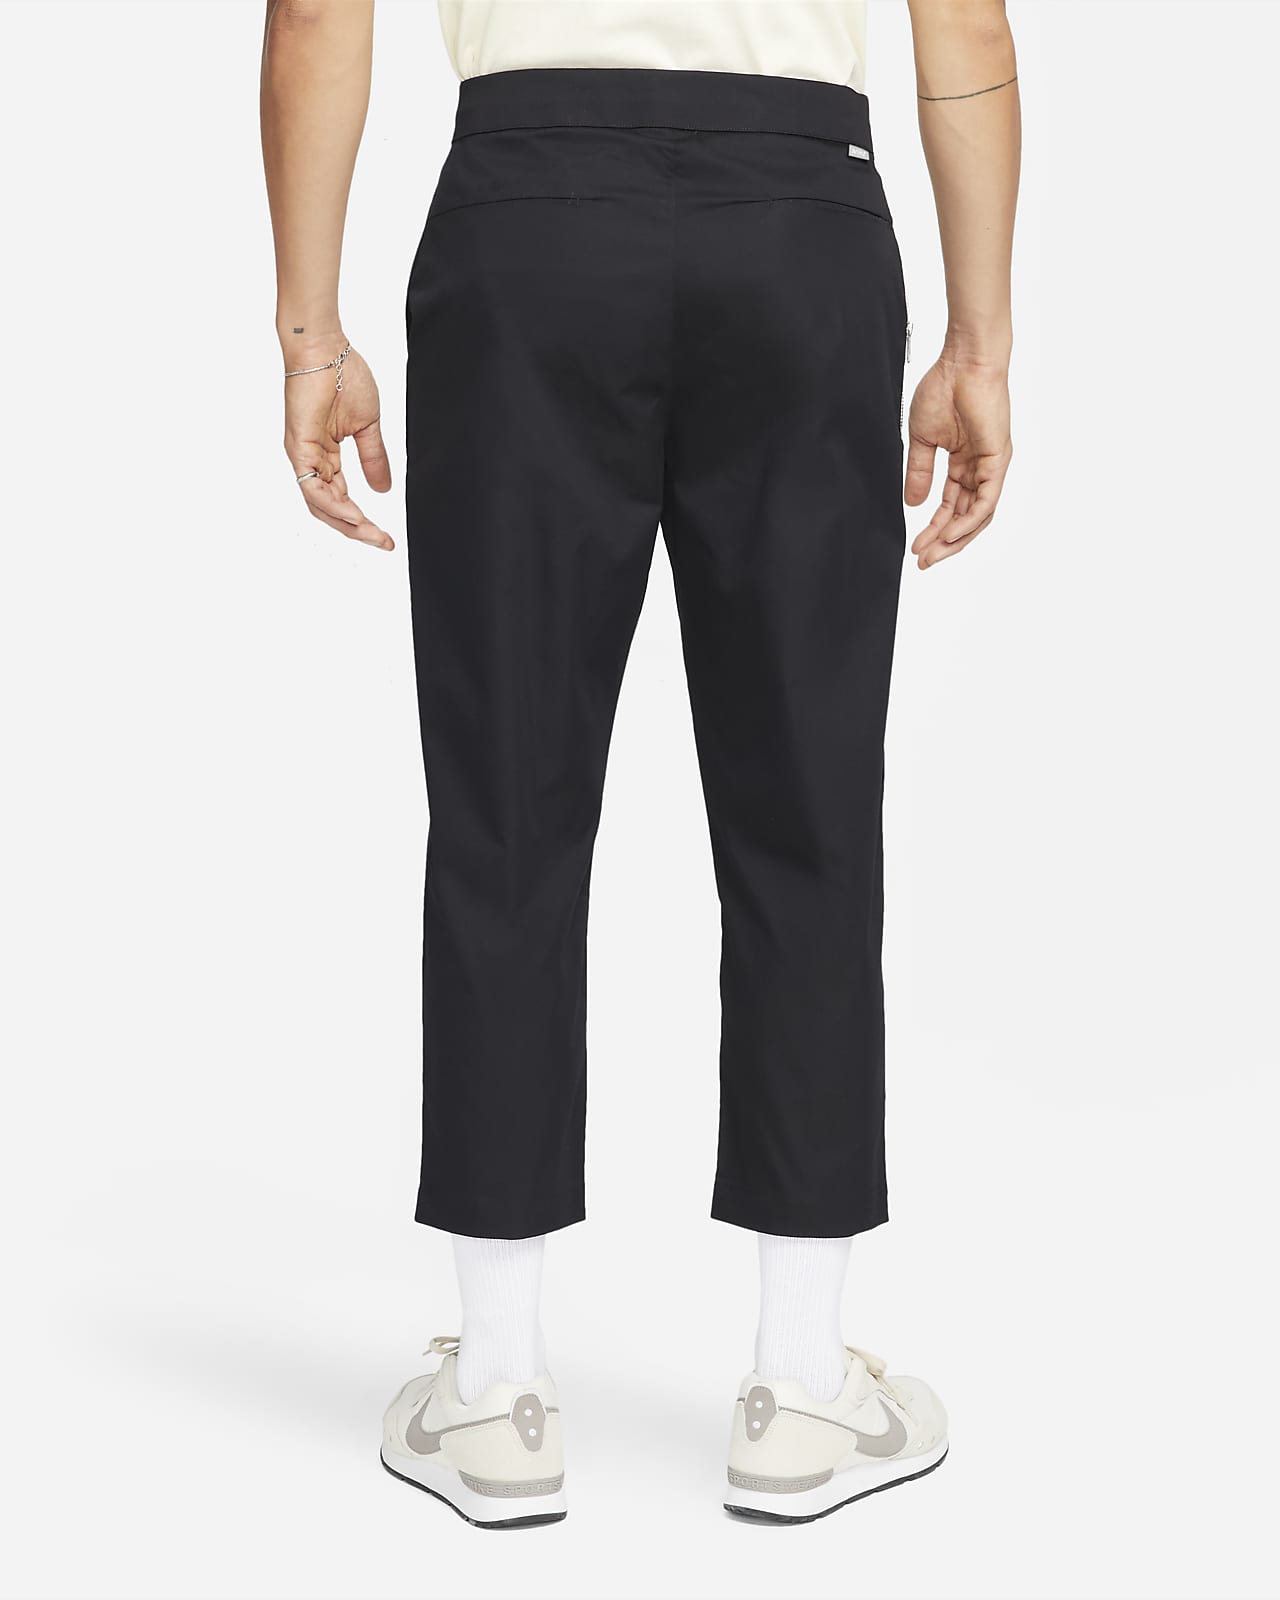 Buy Grey Trousers  Pants for Men by JOHN PLAYERS Online  Ajiocom